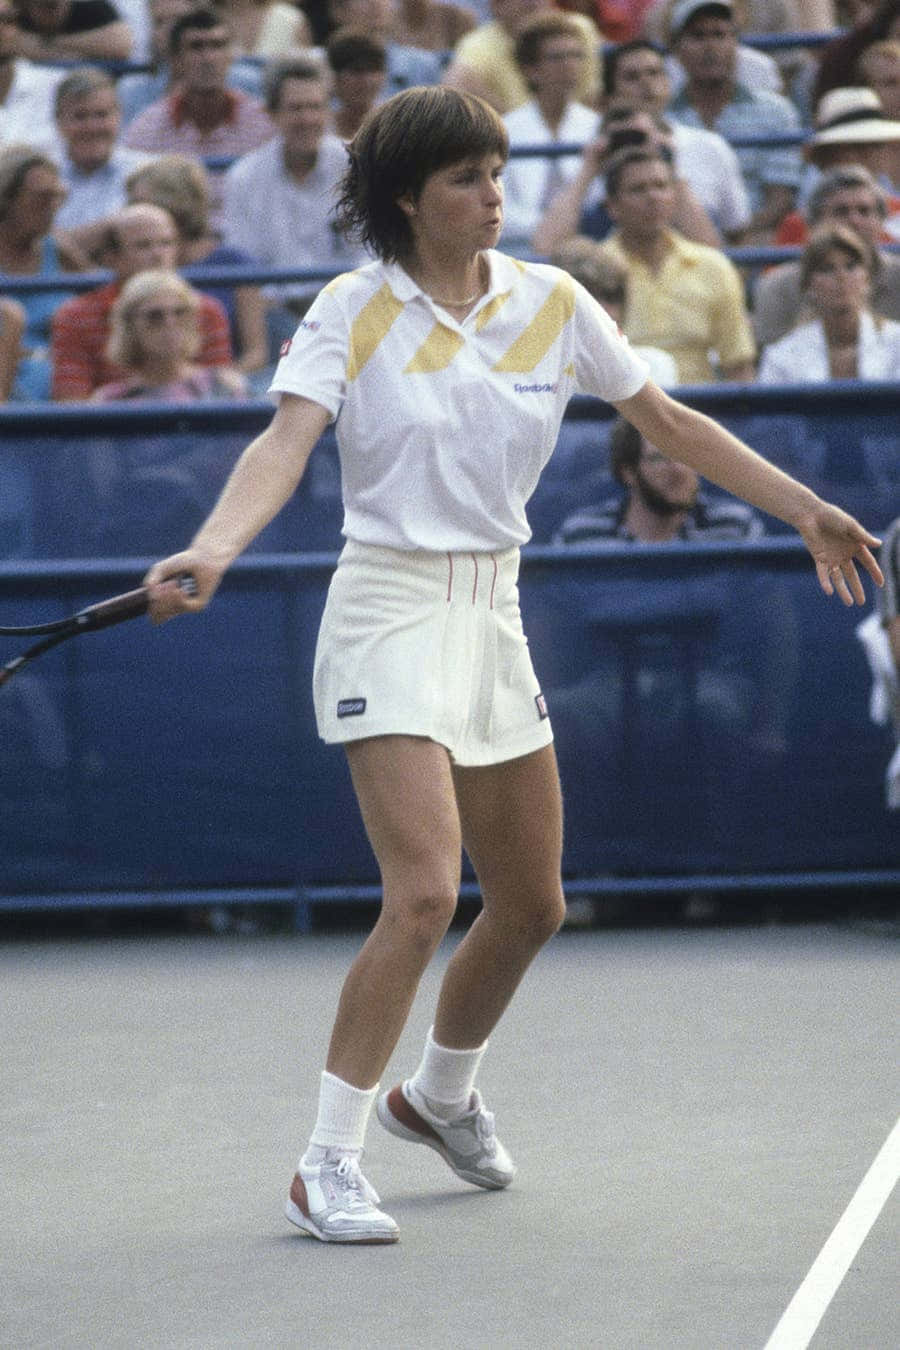 Hana Mandlikova in Action on the Tennis Court Wallpaper